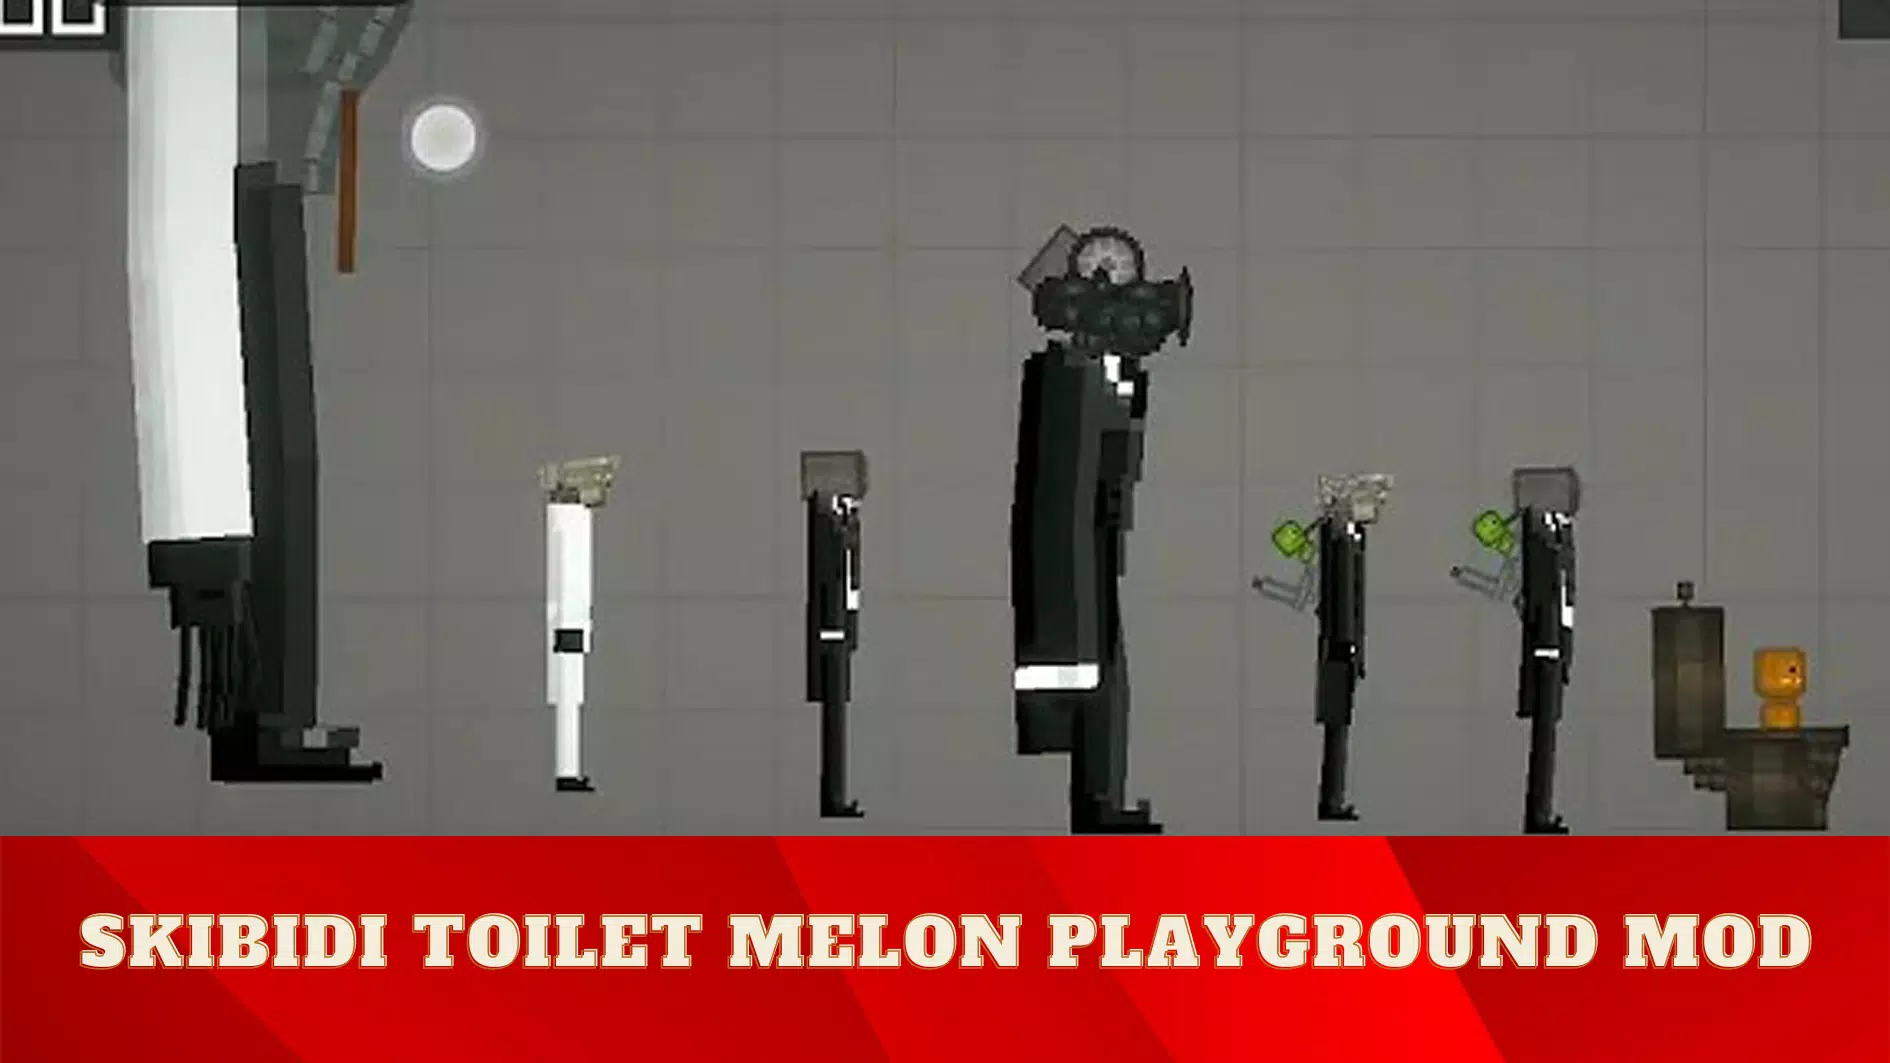 Мод скибиди туалет на Мелон плейграунд и камера. Скибиди туалет в Мелон плейграунд. Scientist skibidi toilet melon playground